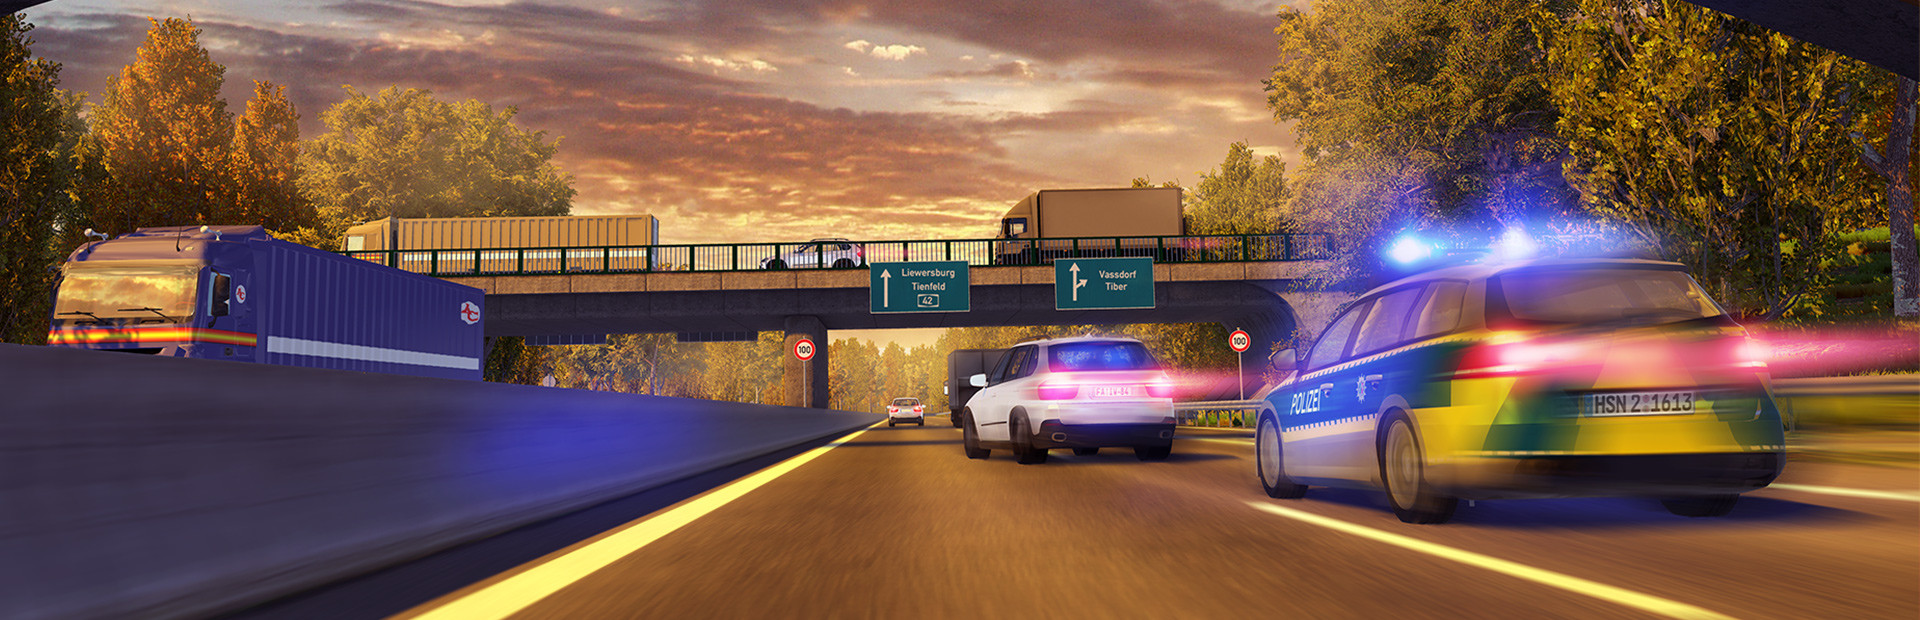 Autobahn Police Simulator cover image